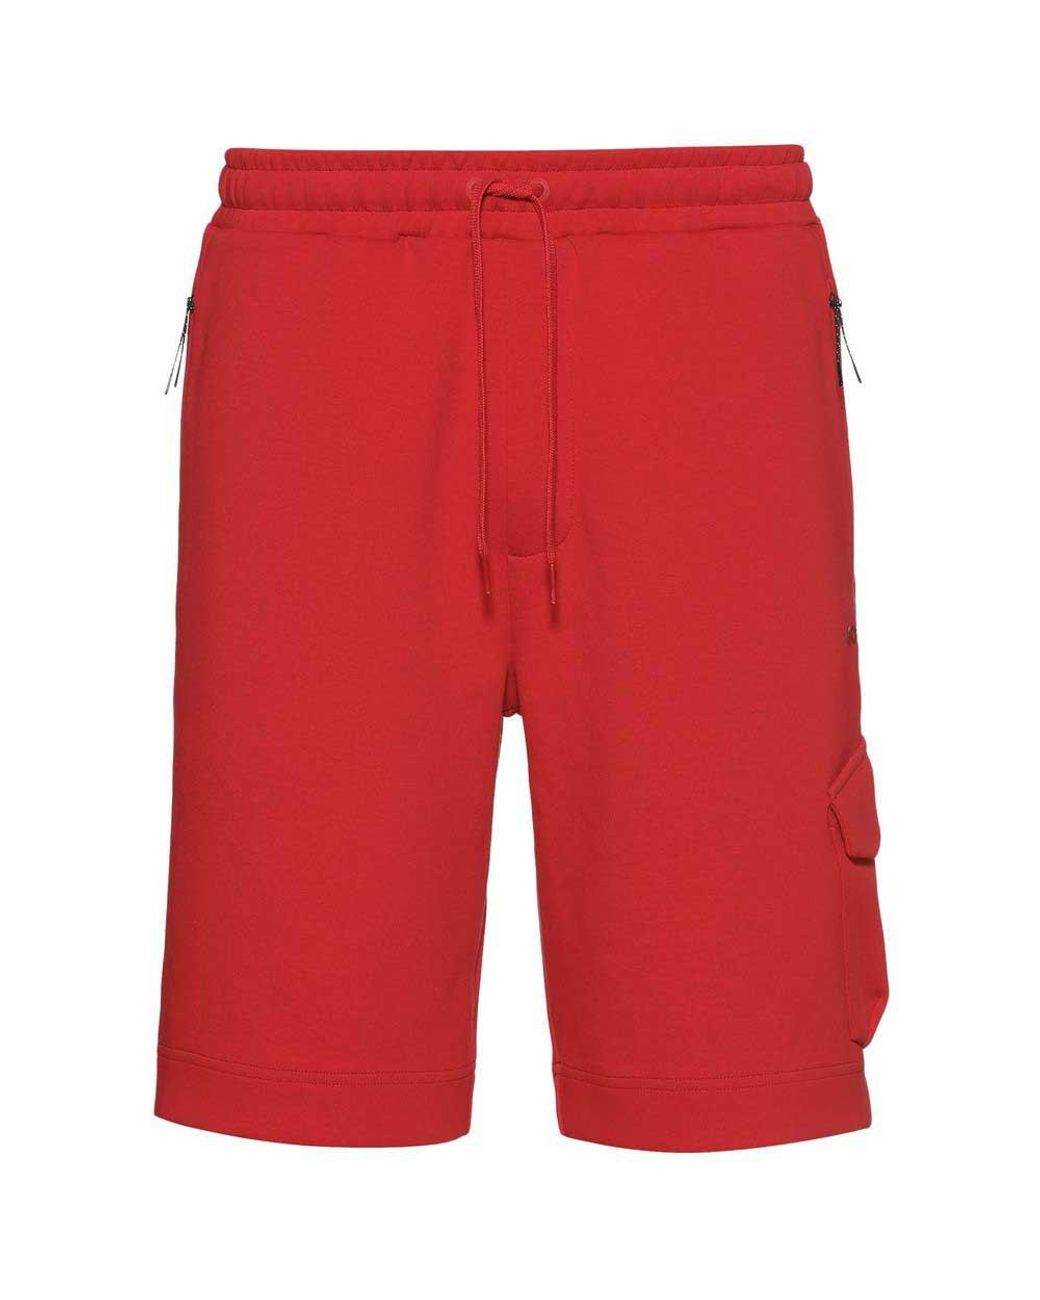 BOSS by HUGO BOSS Hariq 102074 Sweat Shorts Man in Red for Men